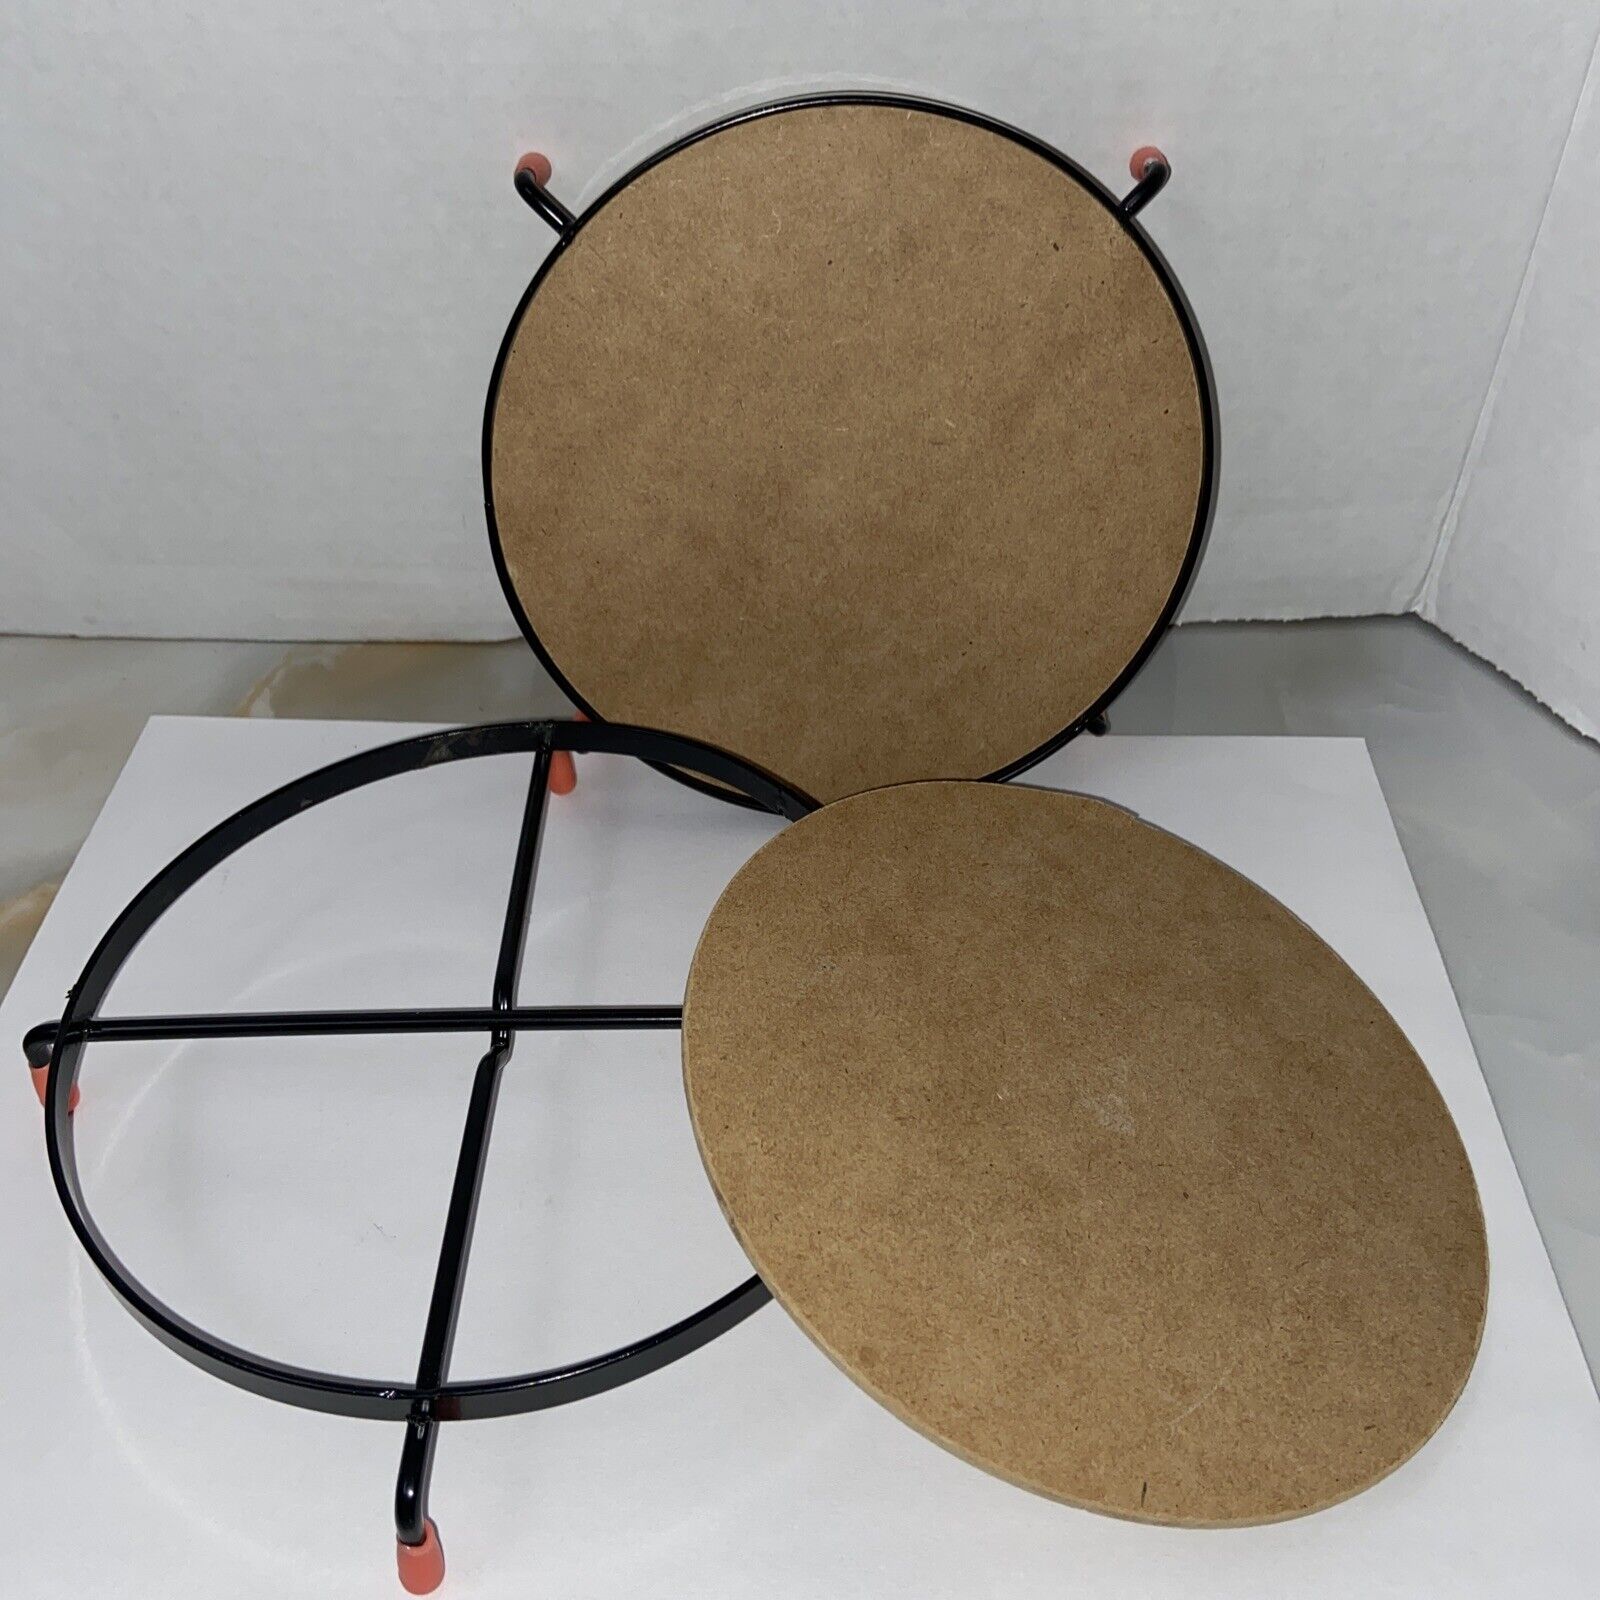 2 Diy 6” Circular Trivet Stand W/ Metal Frame Hardboard Mosaic Craft How To